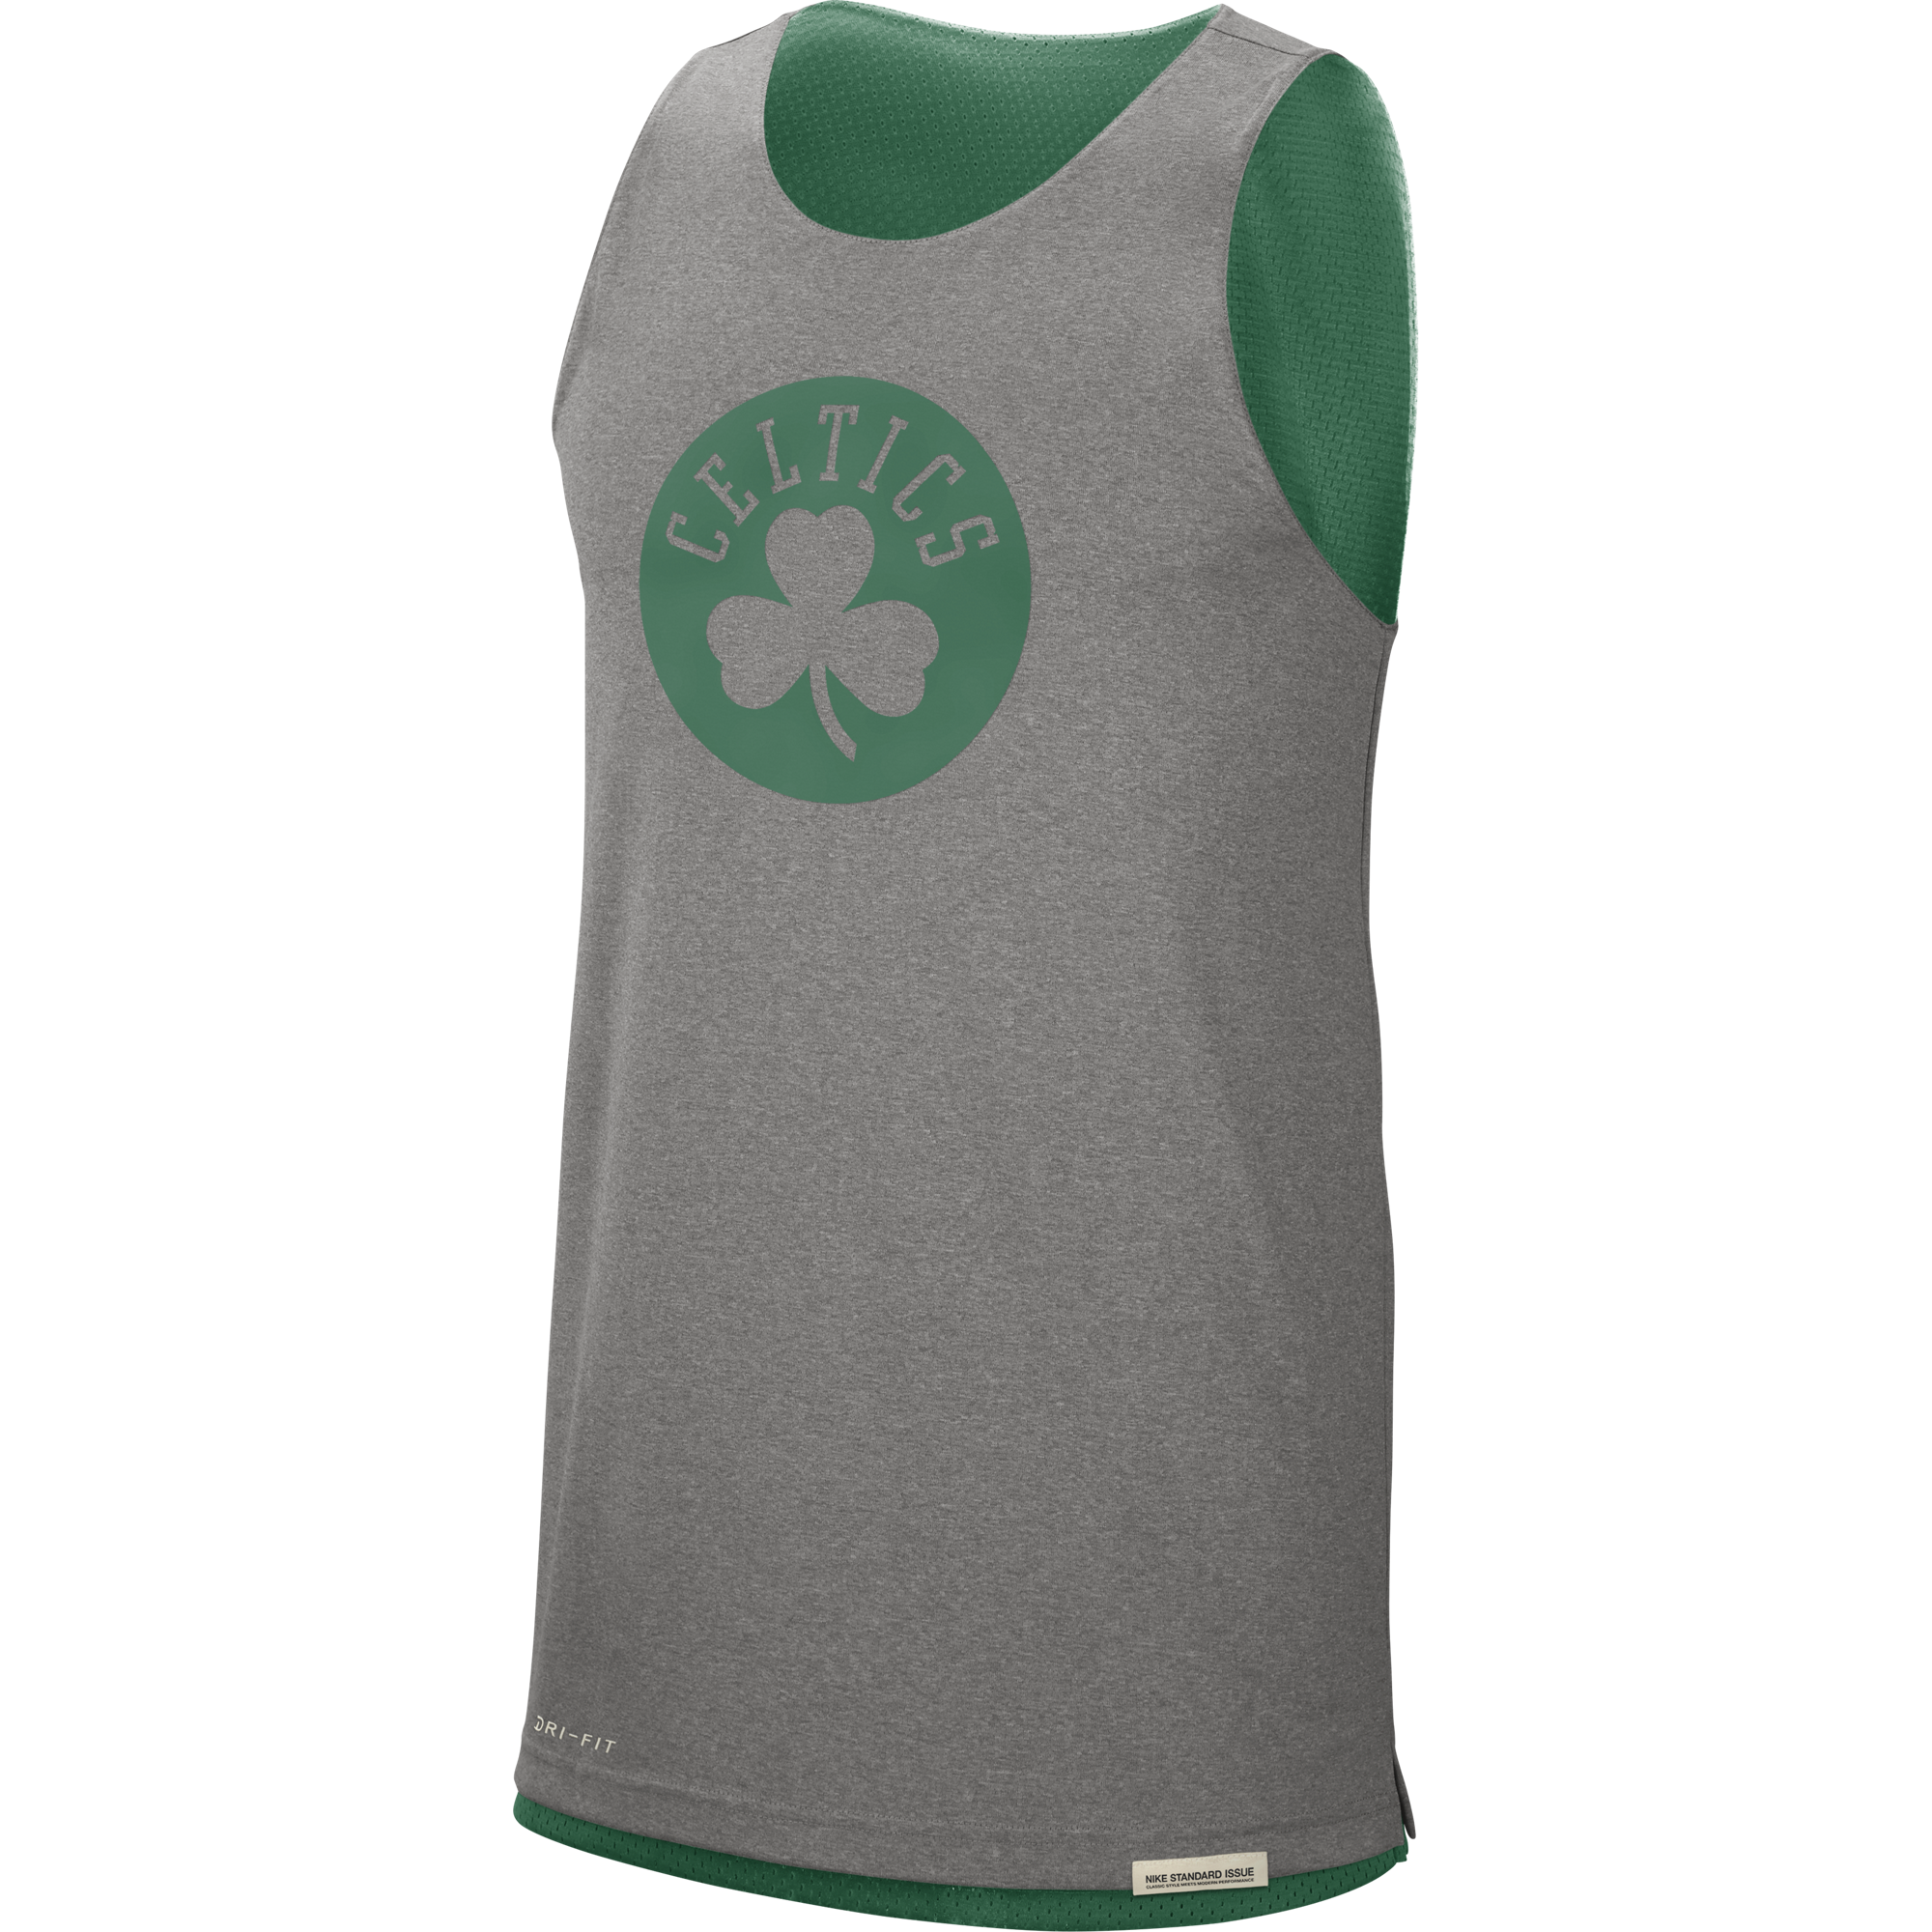 Nike Men's Boston Celtics Nba City Edition Logo Essential Hoodie